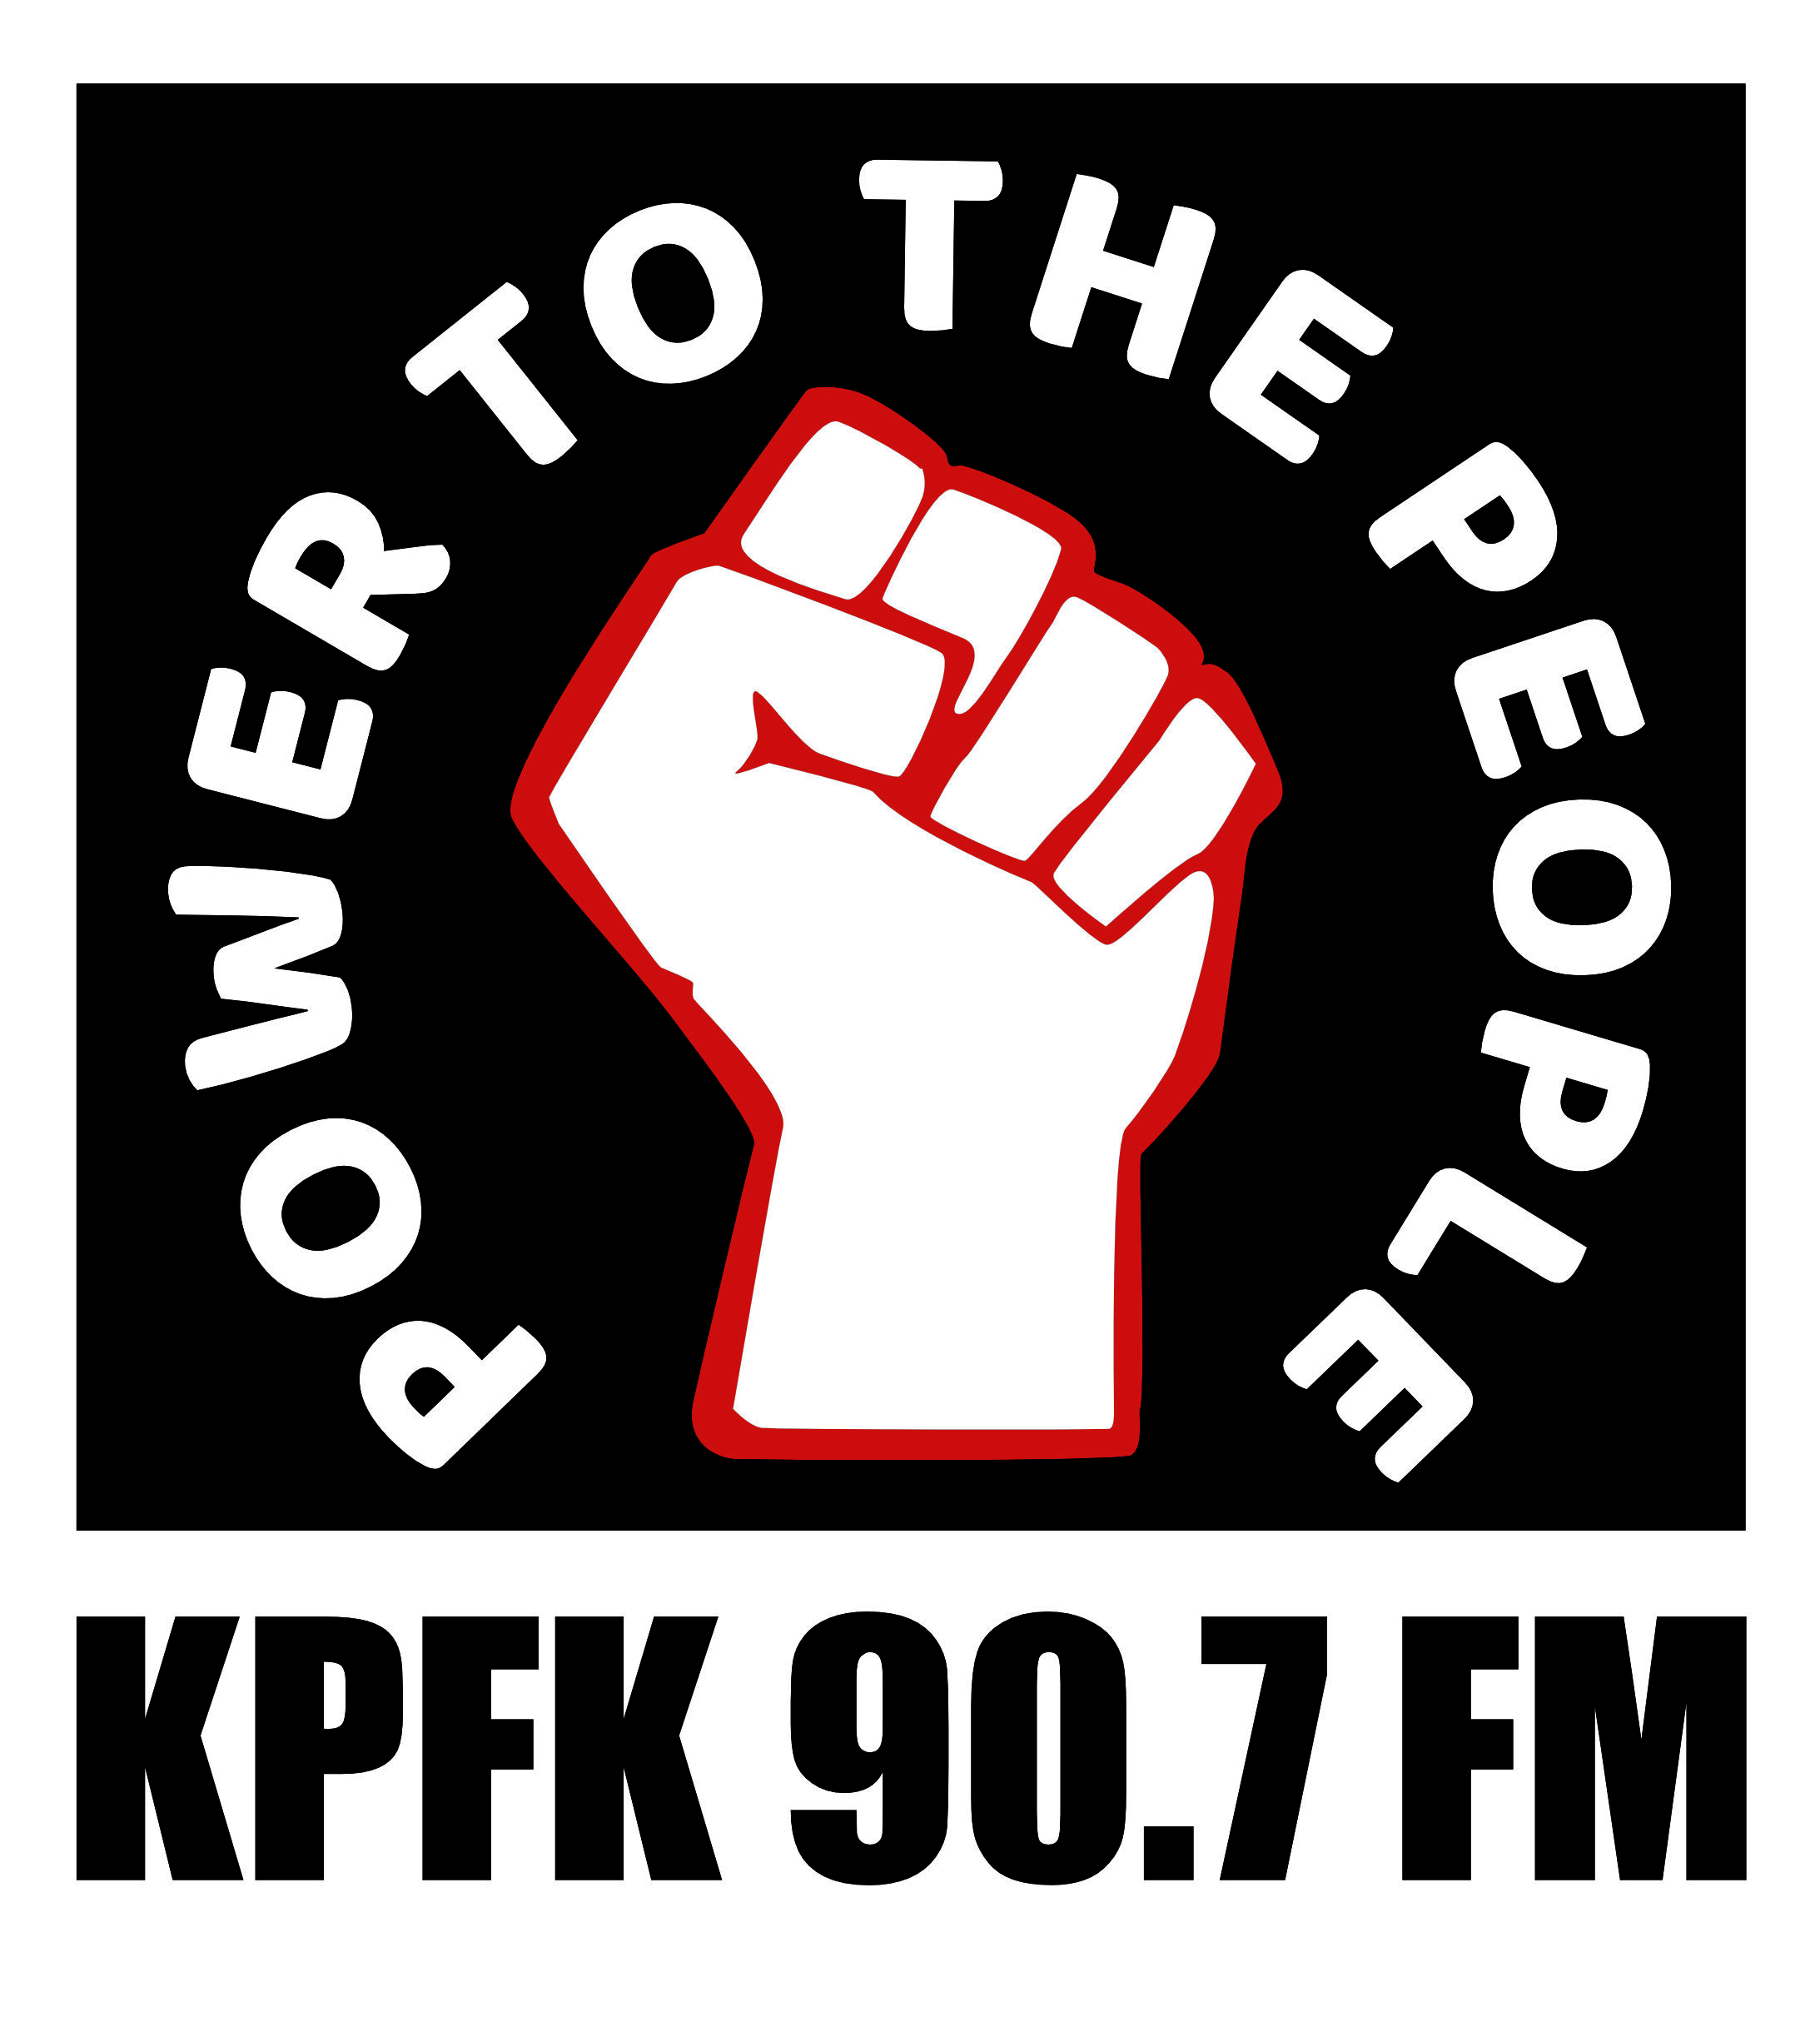 Radio KPFK is not for sale